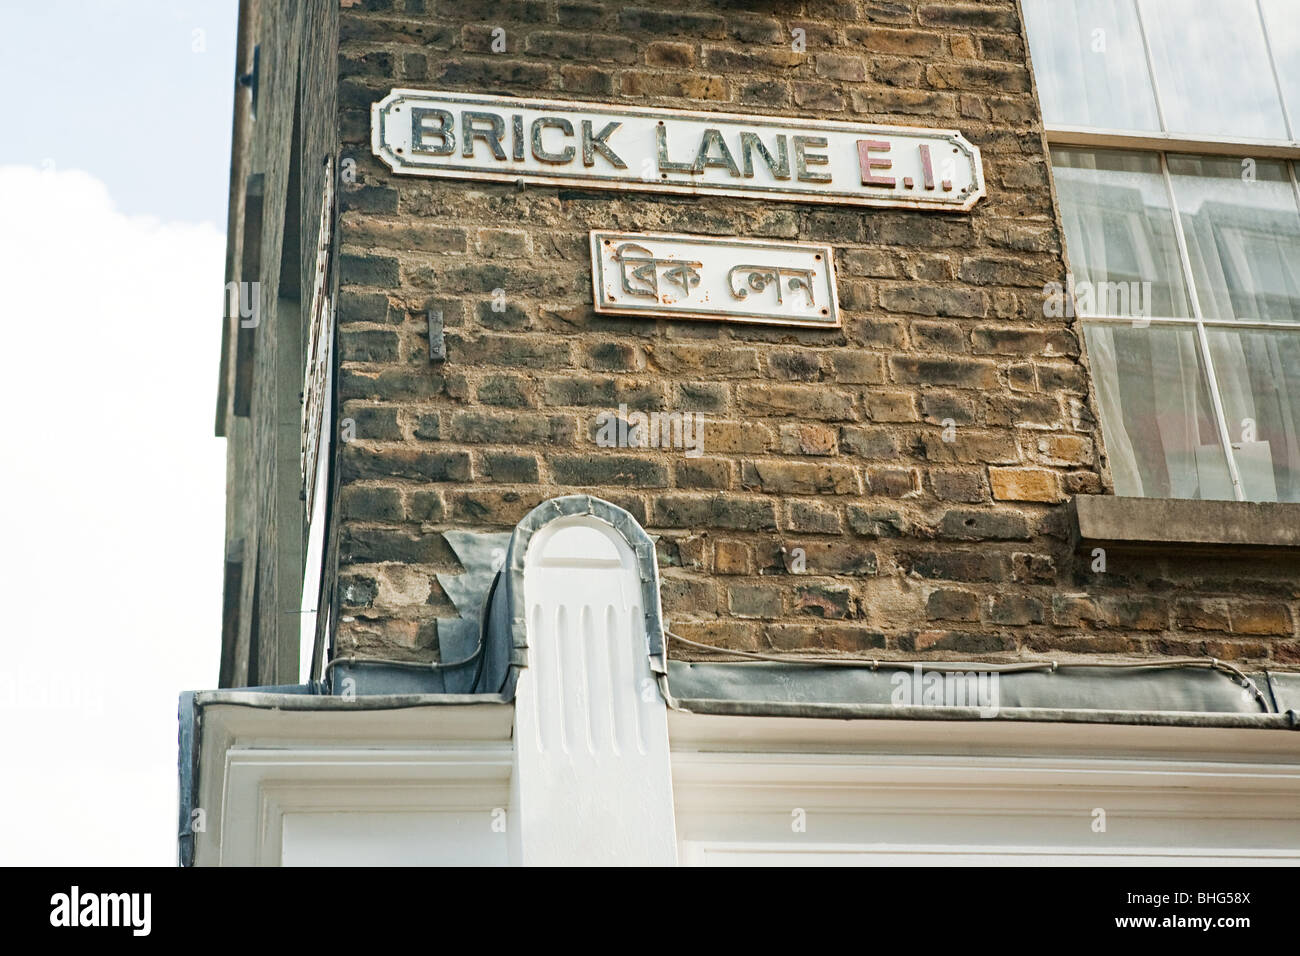 A brick lane road sign Stock Photo